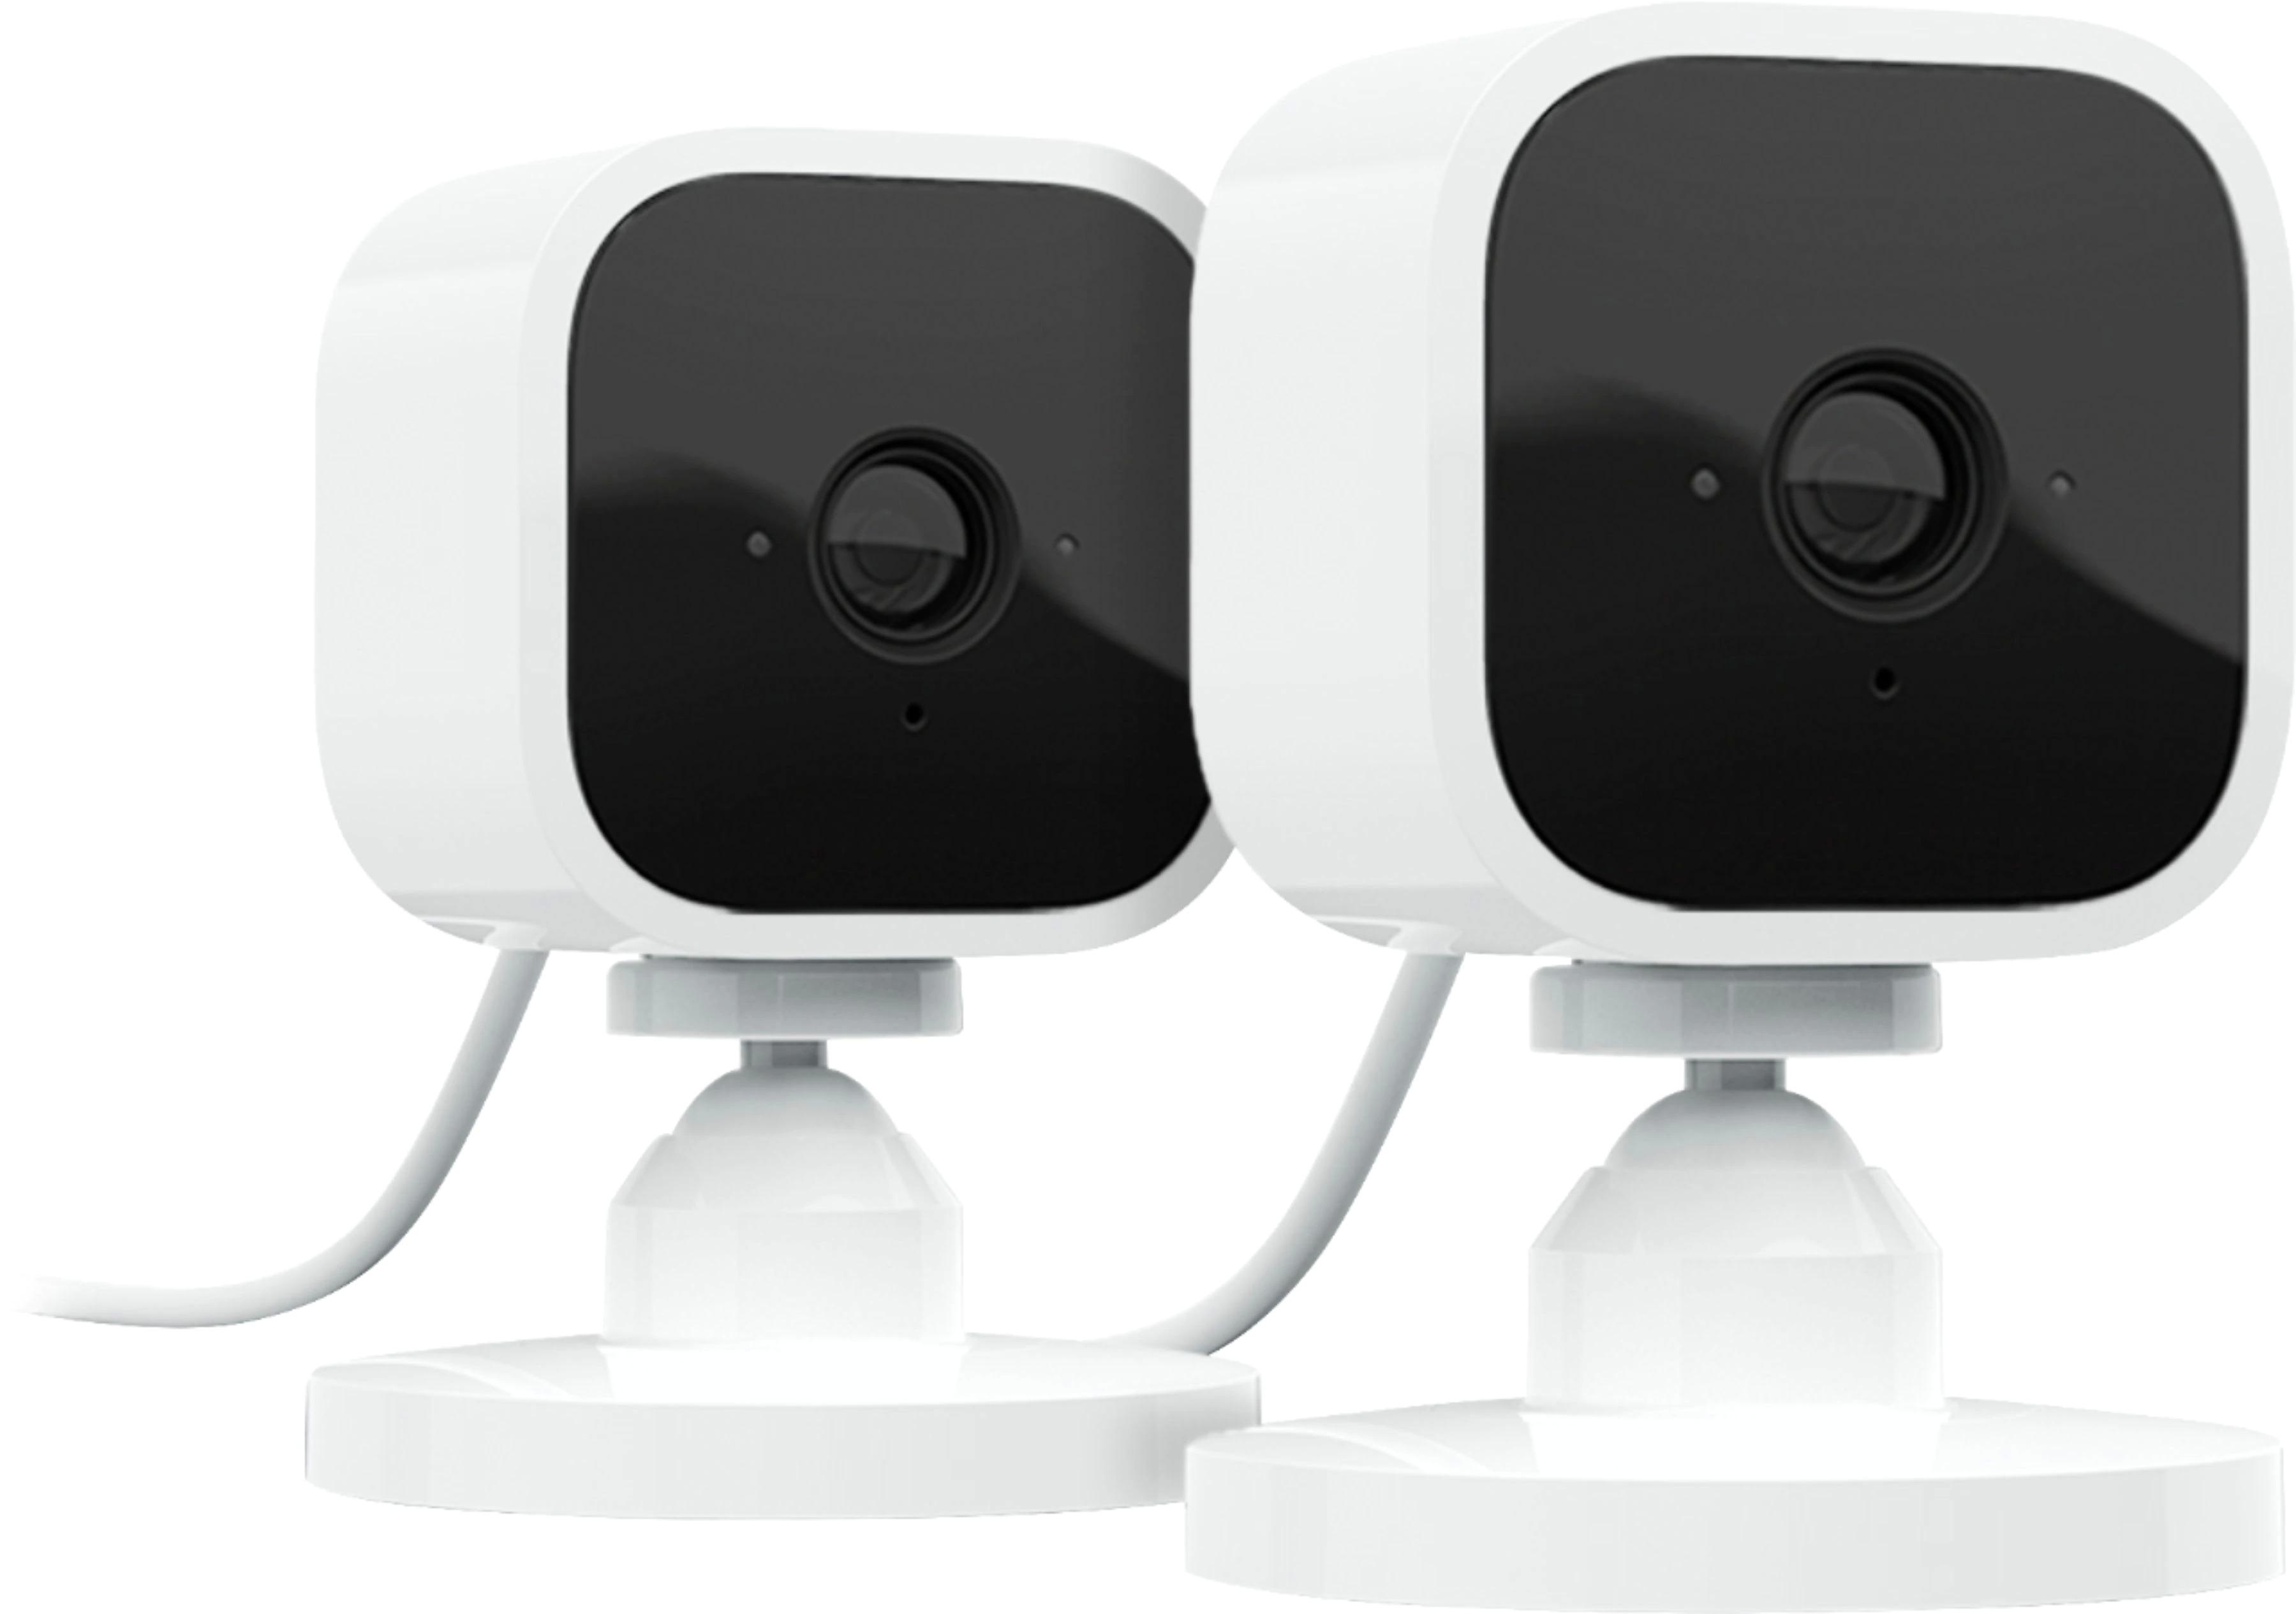 Blink Mini 1080p HD Indoor Smart Security Camera 2 Sets for $29.99